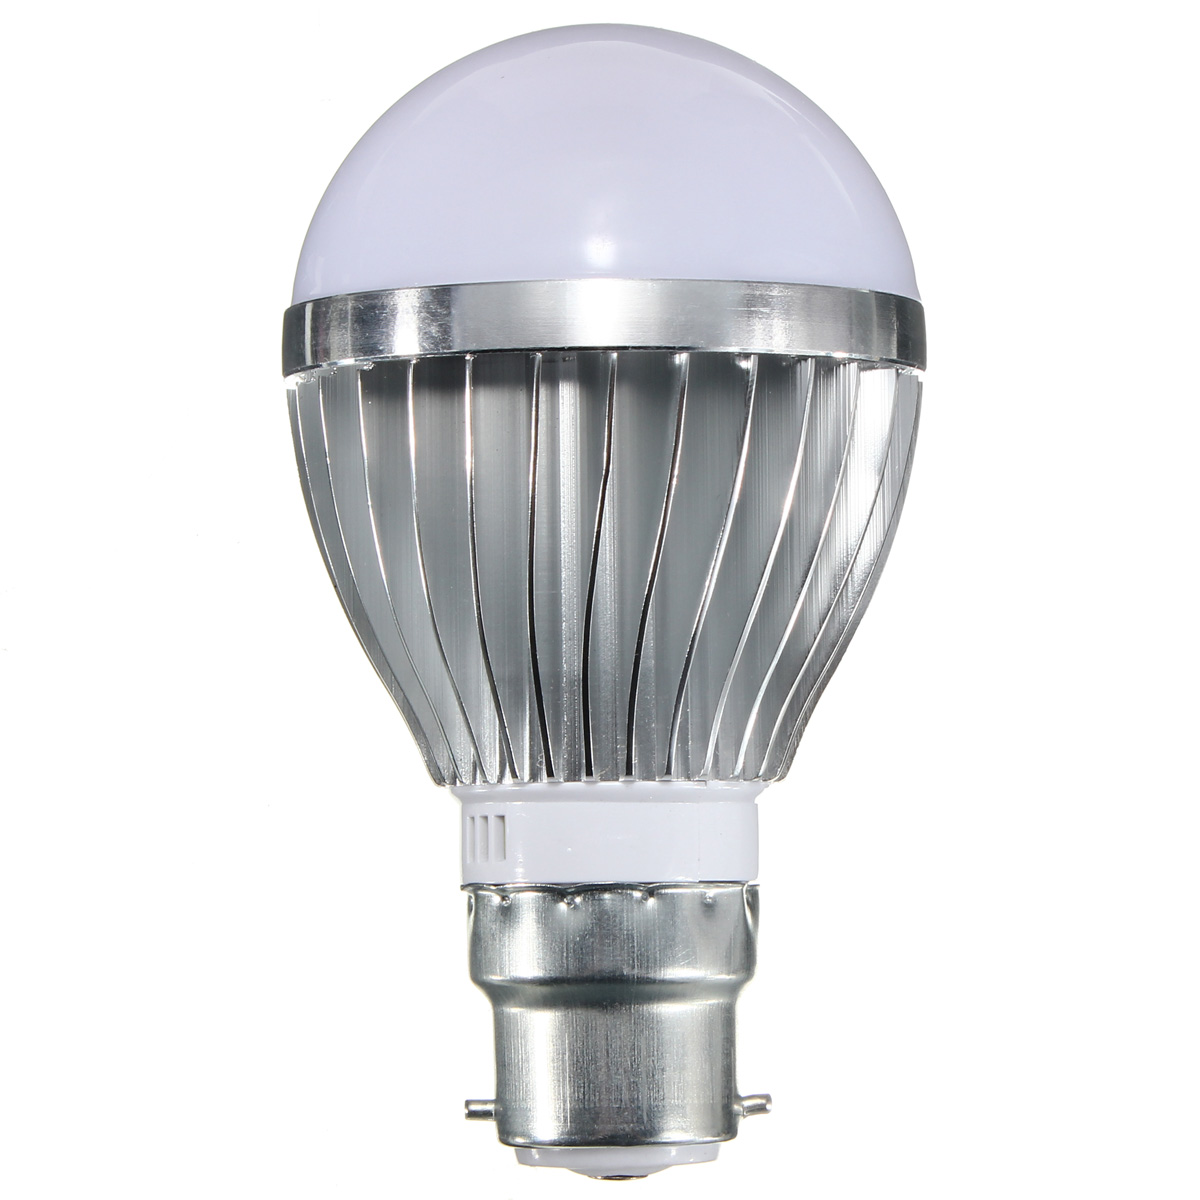 E27 B22 7W Dimmable 10 SMD5730 LED Bayonet Edison Bulb Lamp Globe Light Warm White AC 110-240V